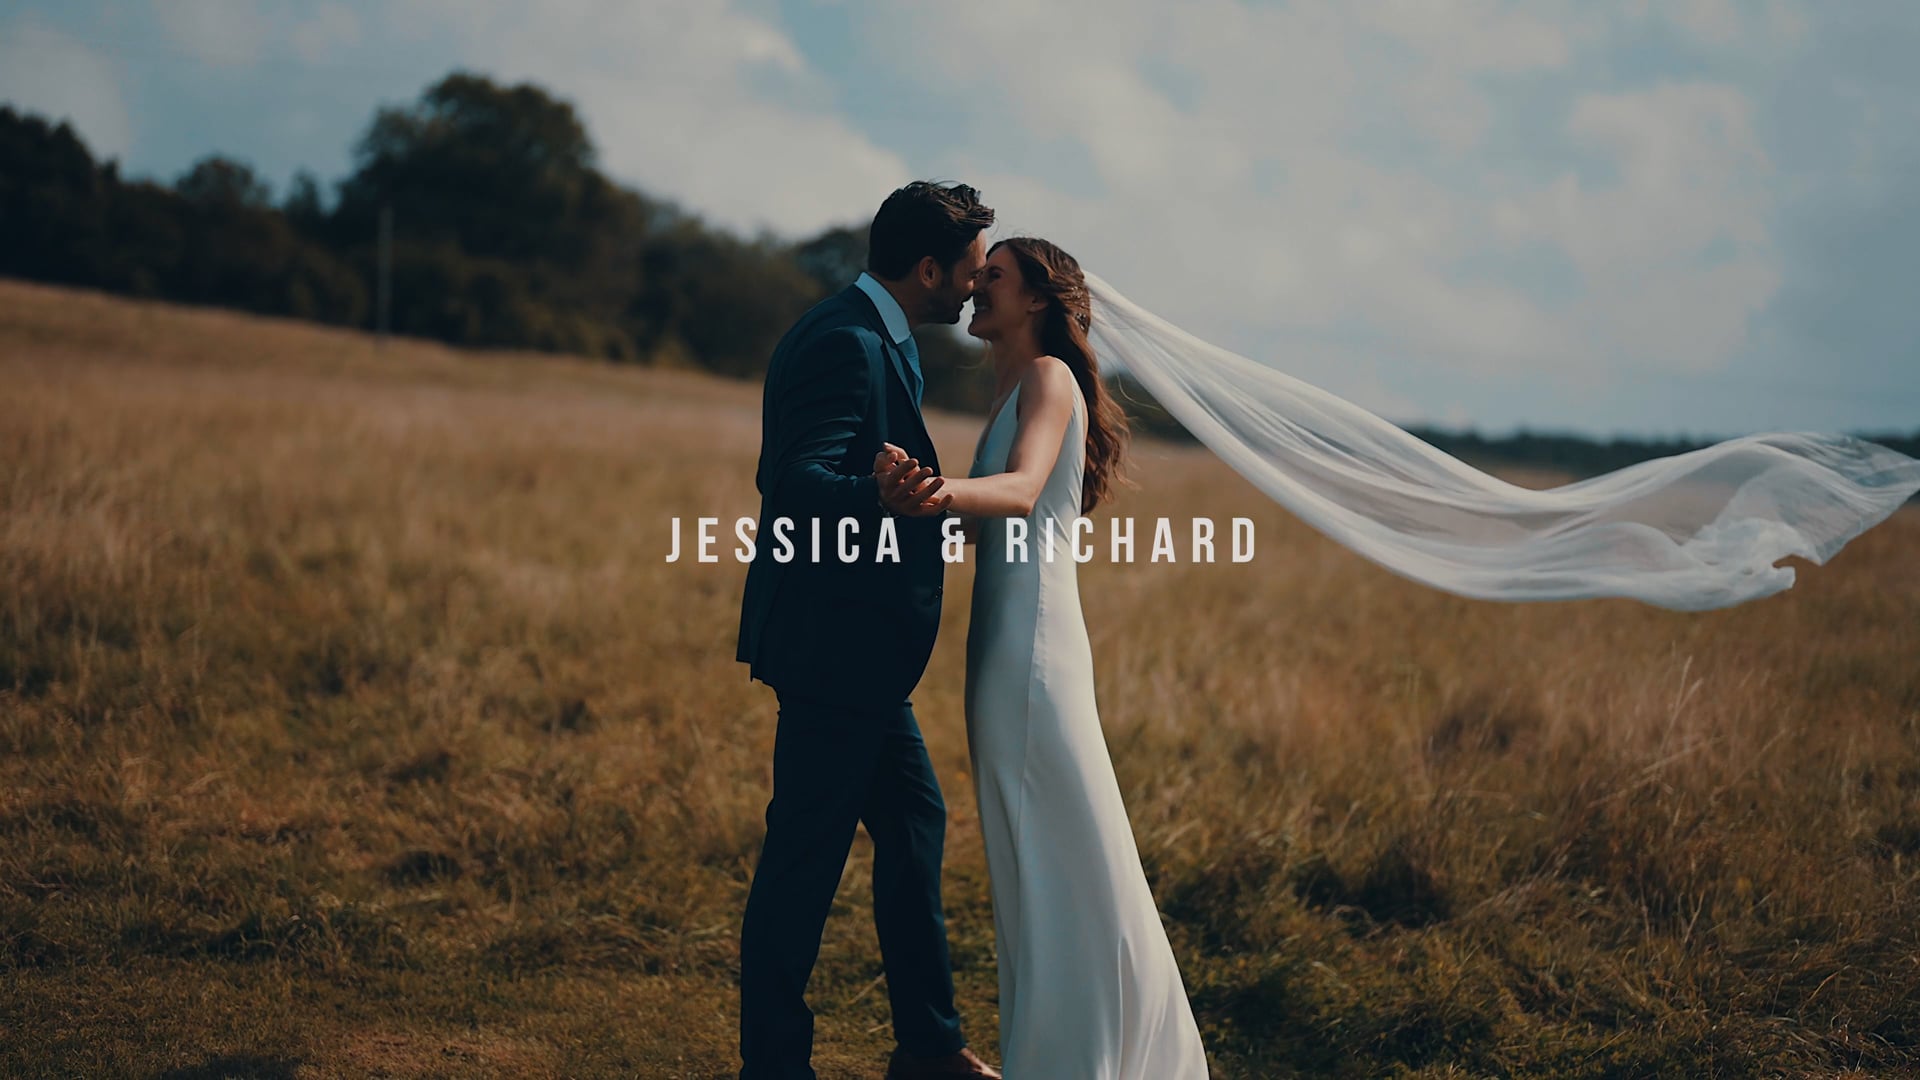 Jessica & Richard - Upwaltham Barns - 5 minute Film